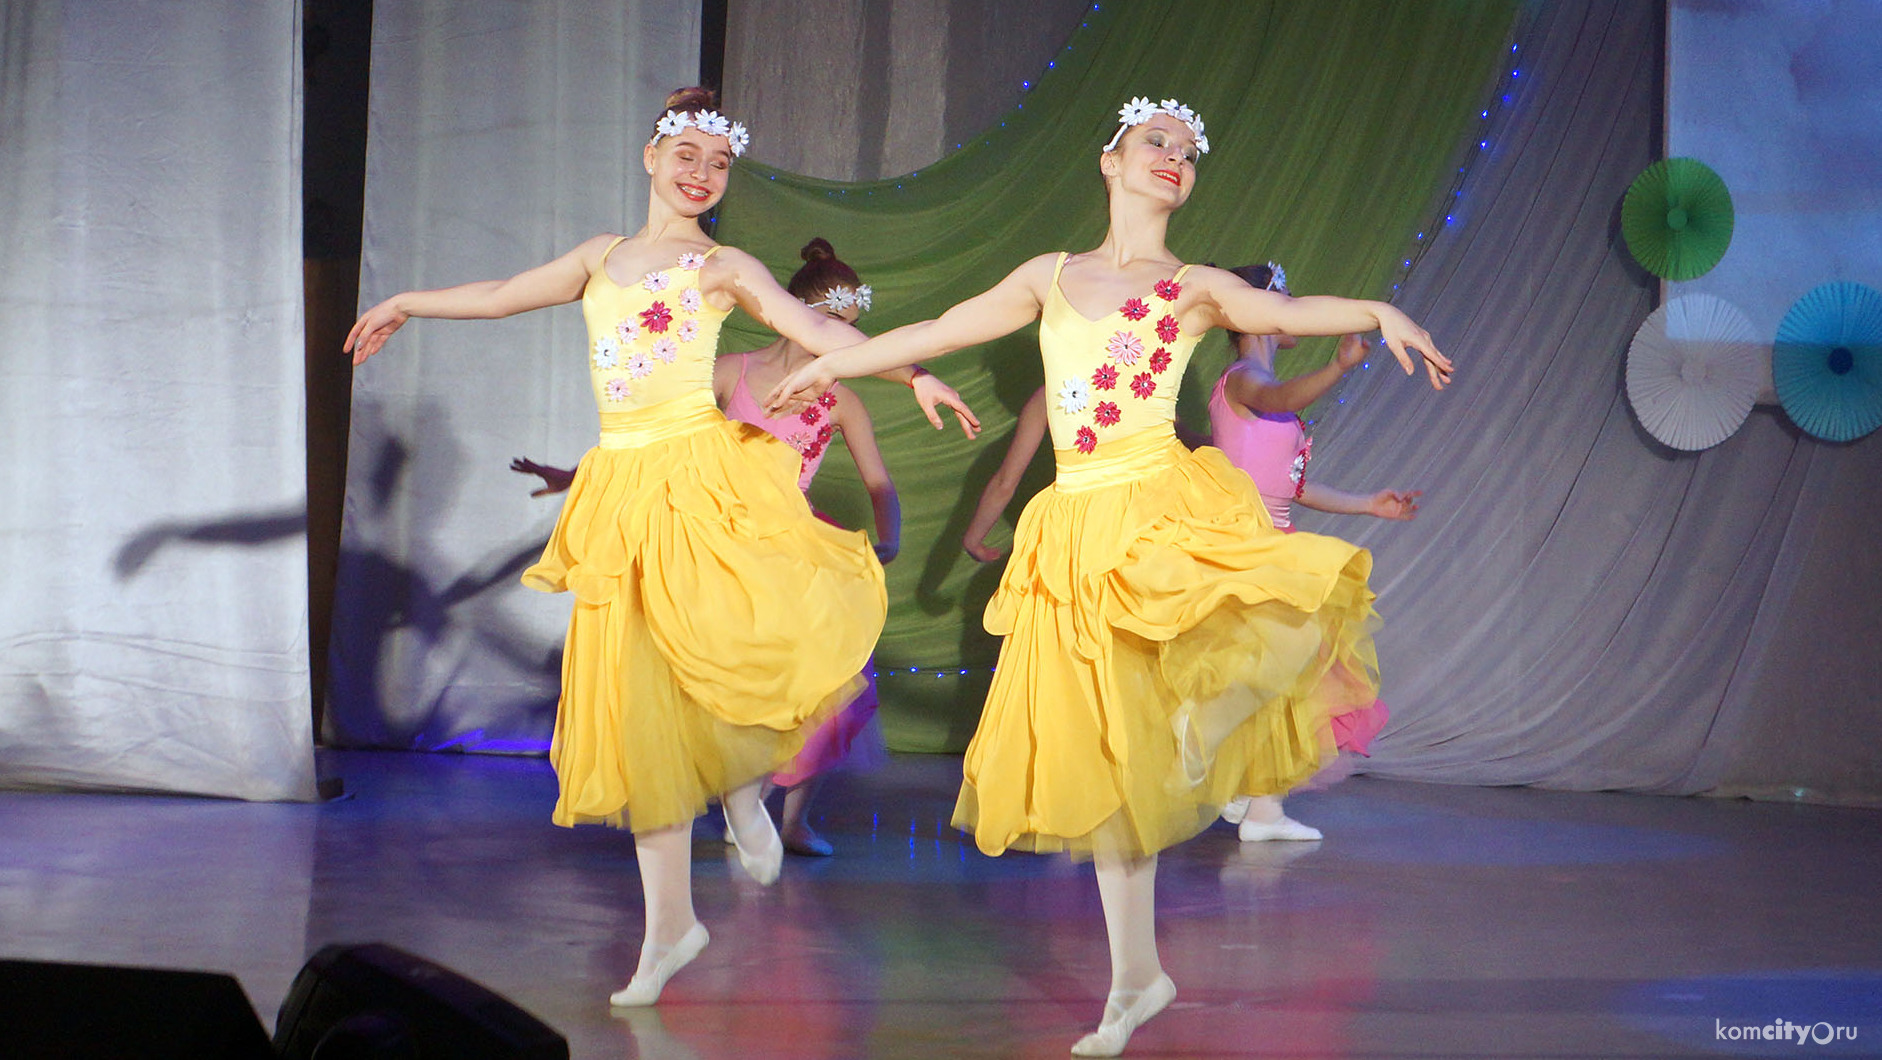 Фестиваль детского творчества «Времена года» прошёл в Комсомольске-на-Амуре